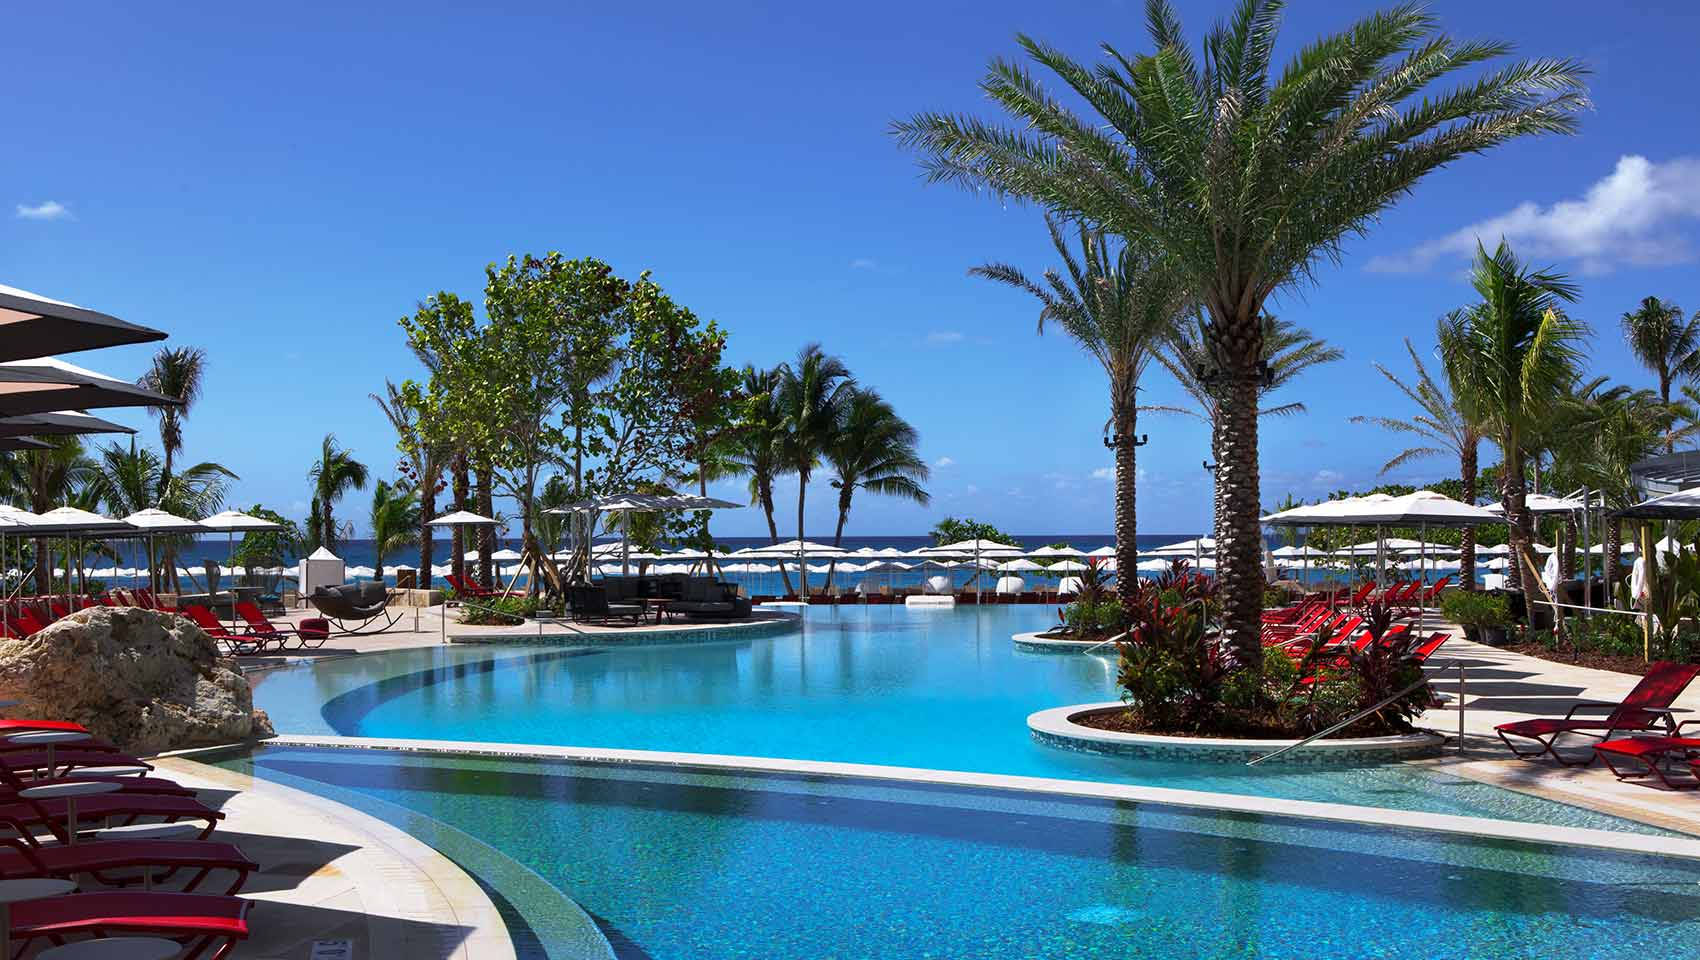 Cayman Island Resort And Spa Wallpaper